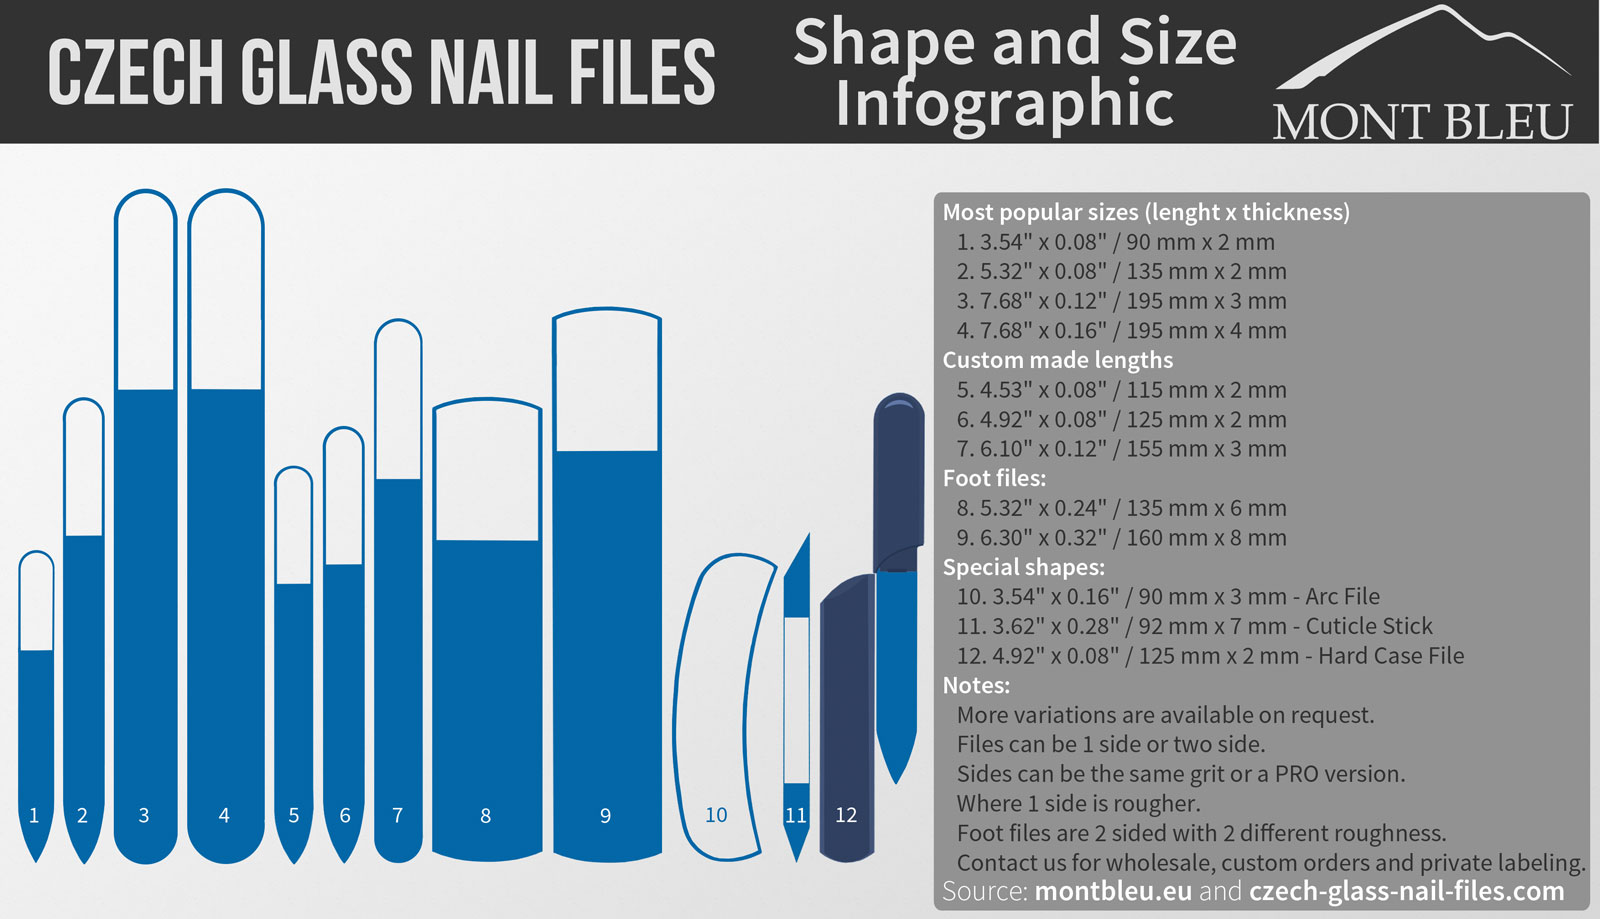 Czech Glass Nail Files Infographic by Mont Bleu